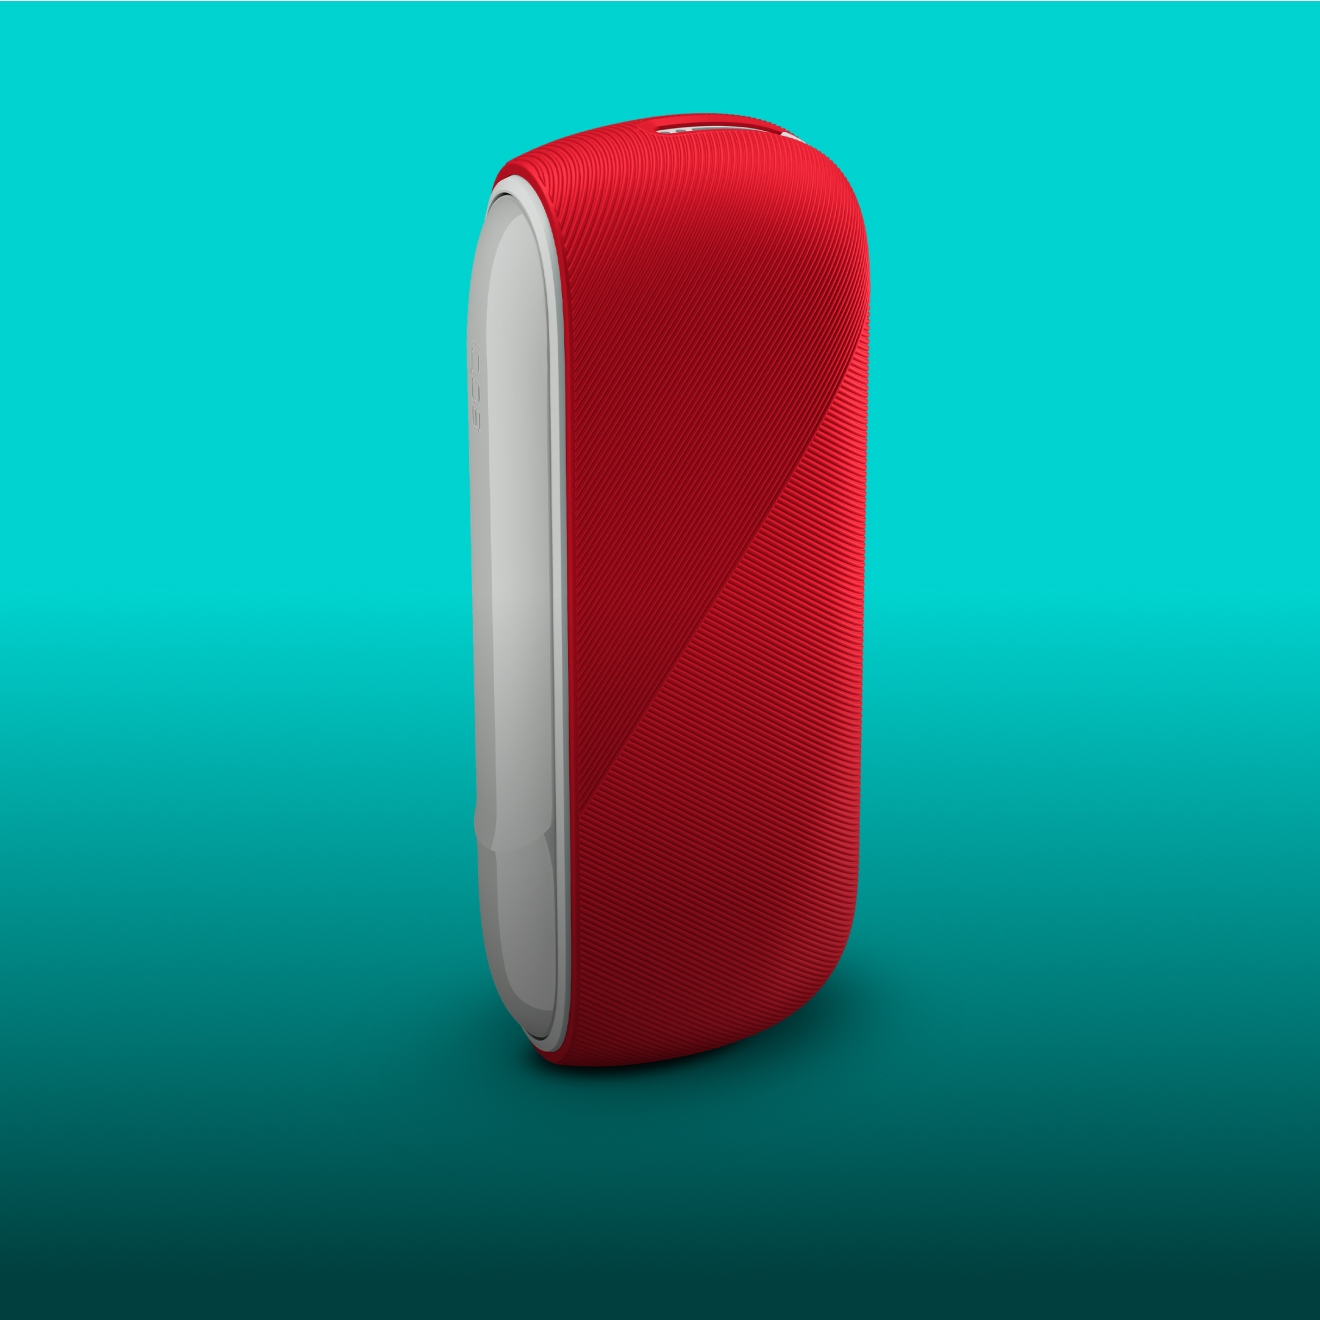 Accessoires IQOS Originals Duo : housse en silicone rouge.